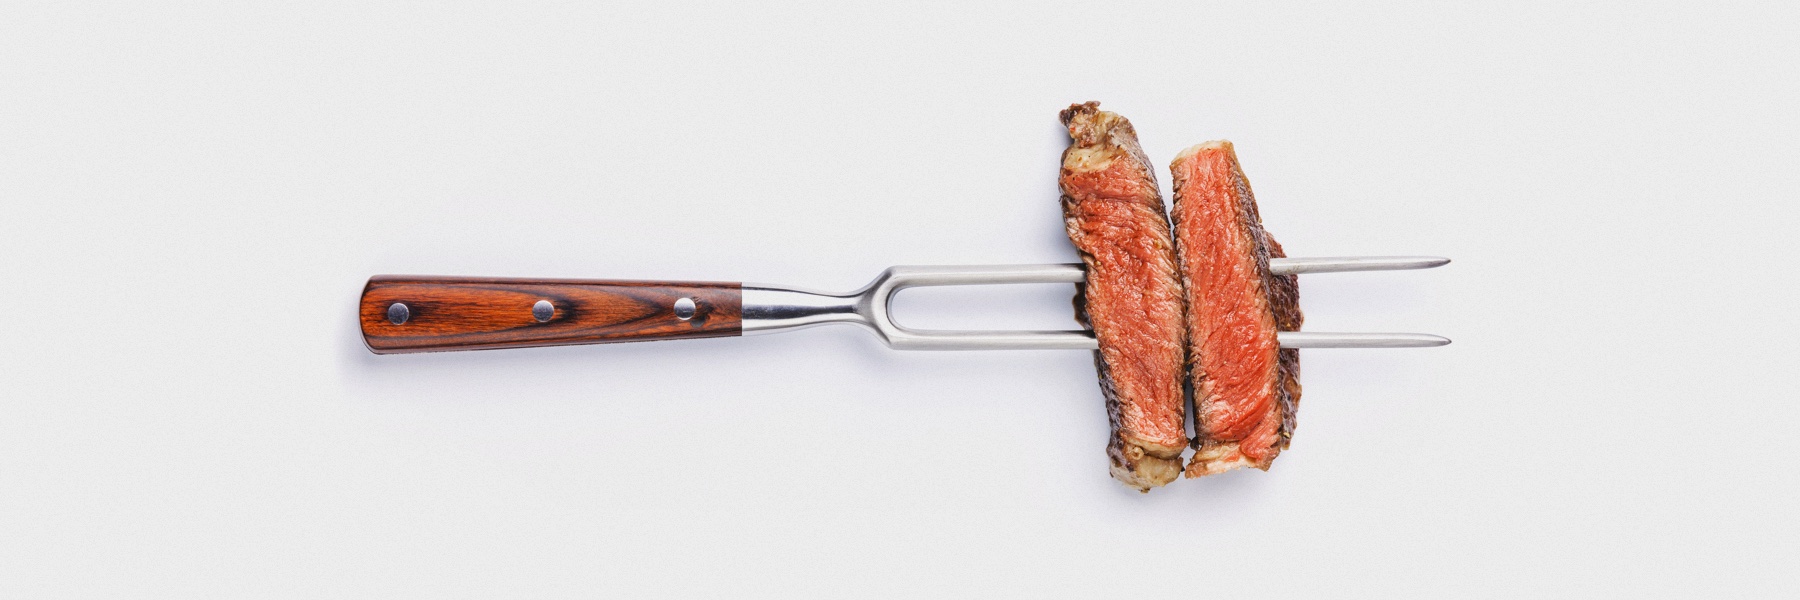 Slices of Medium rare grilled Steak Ribeye on meat fork.